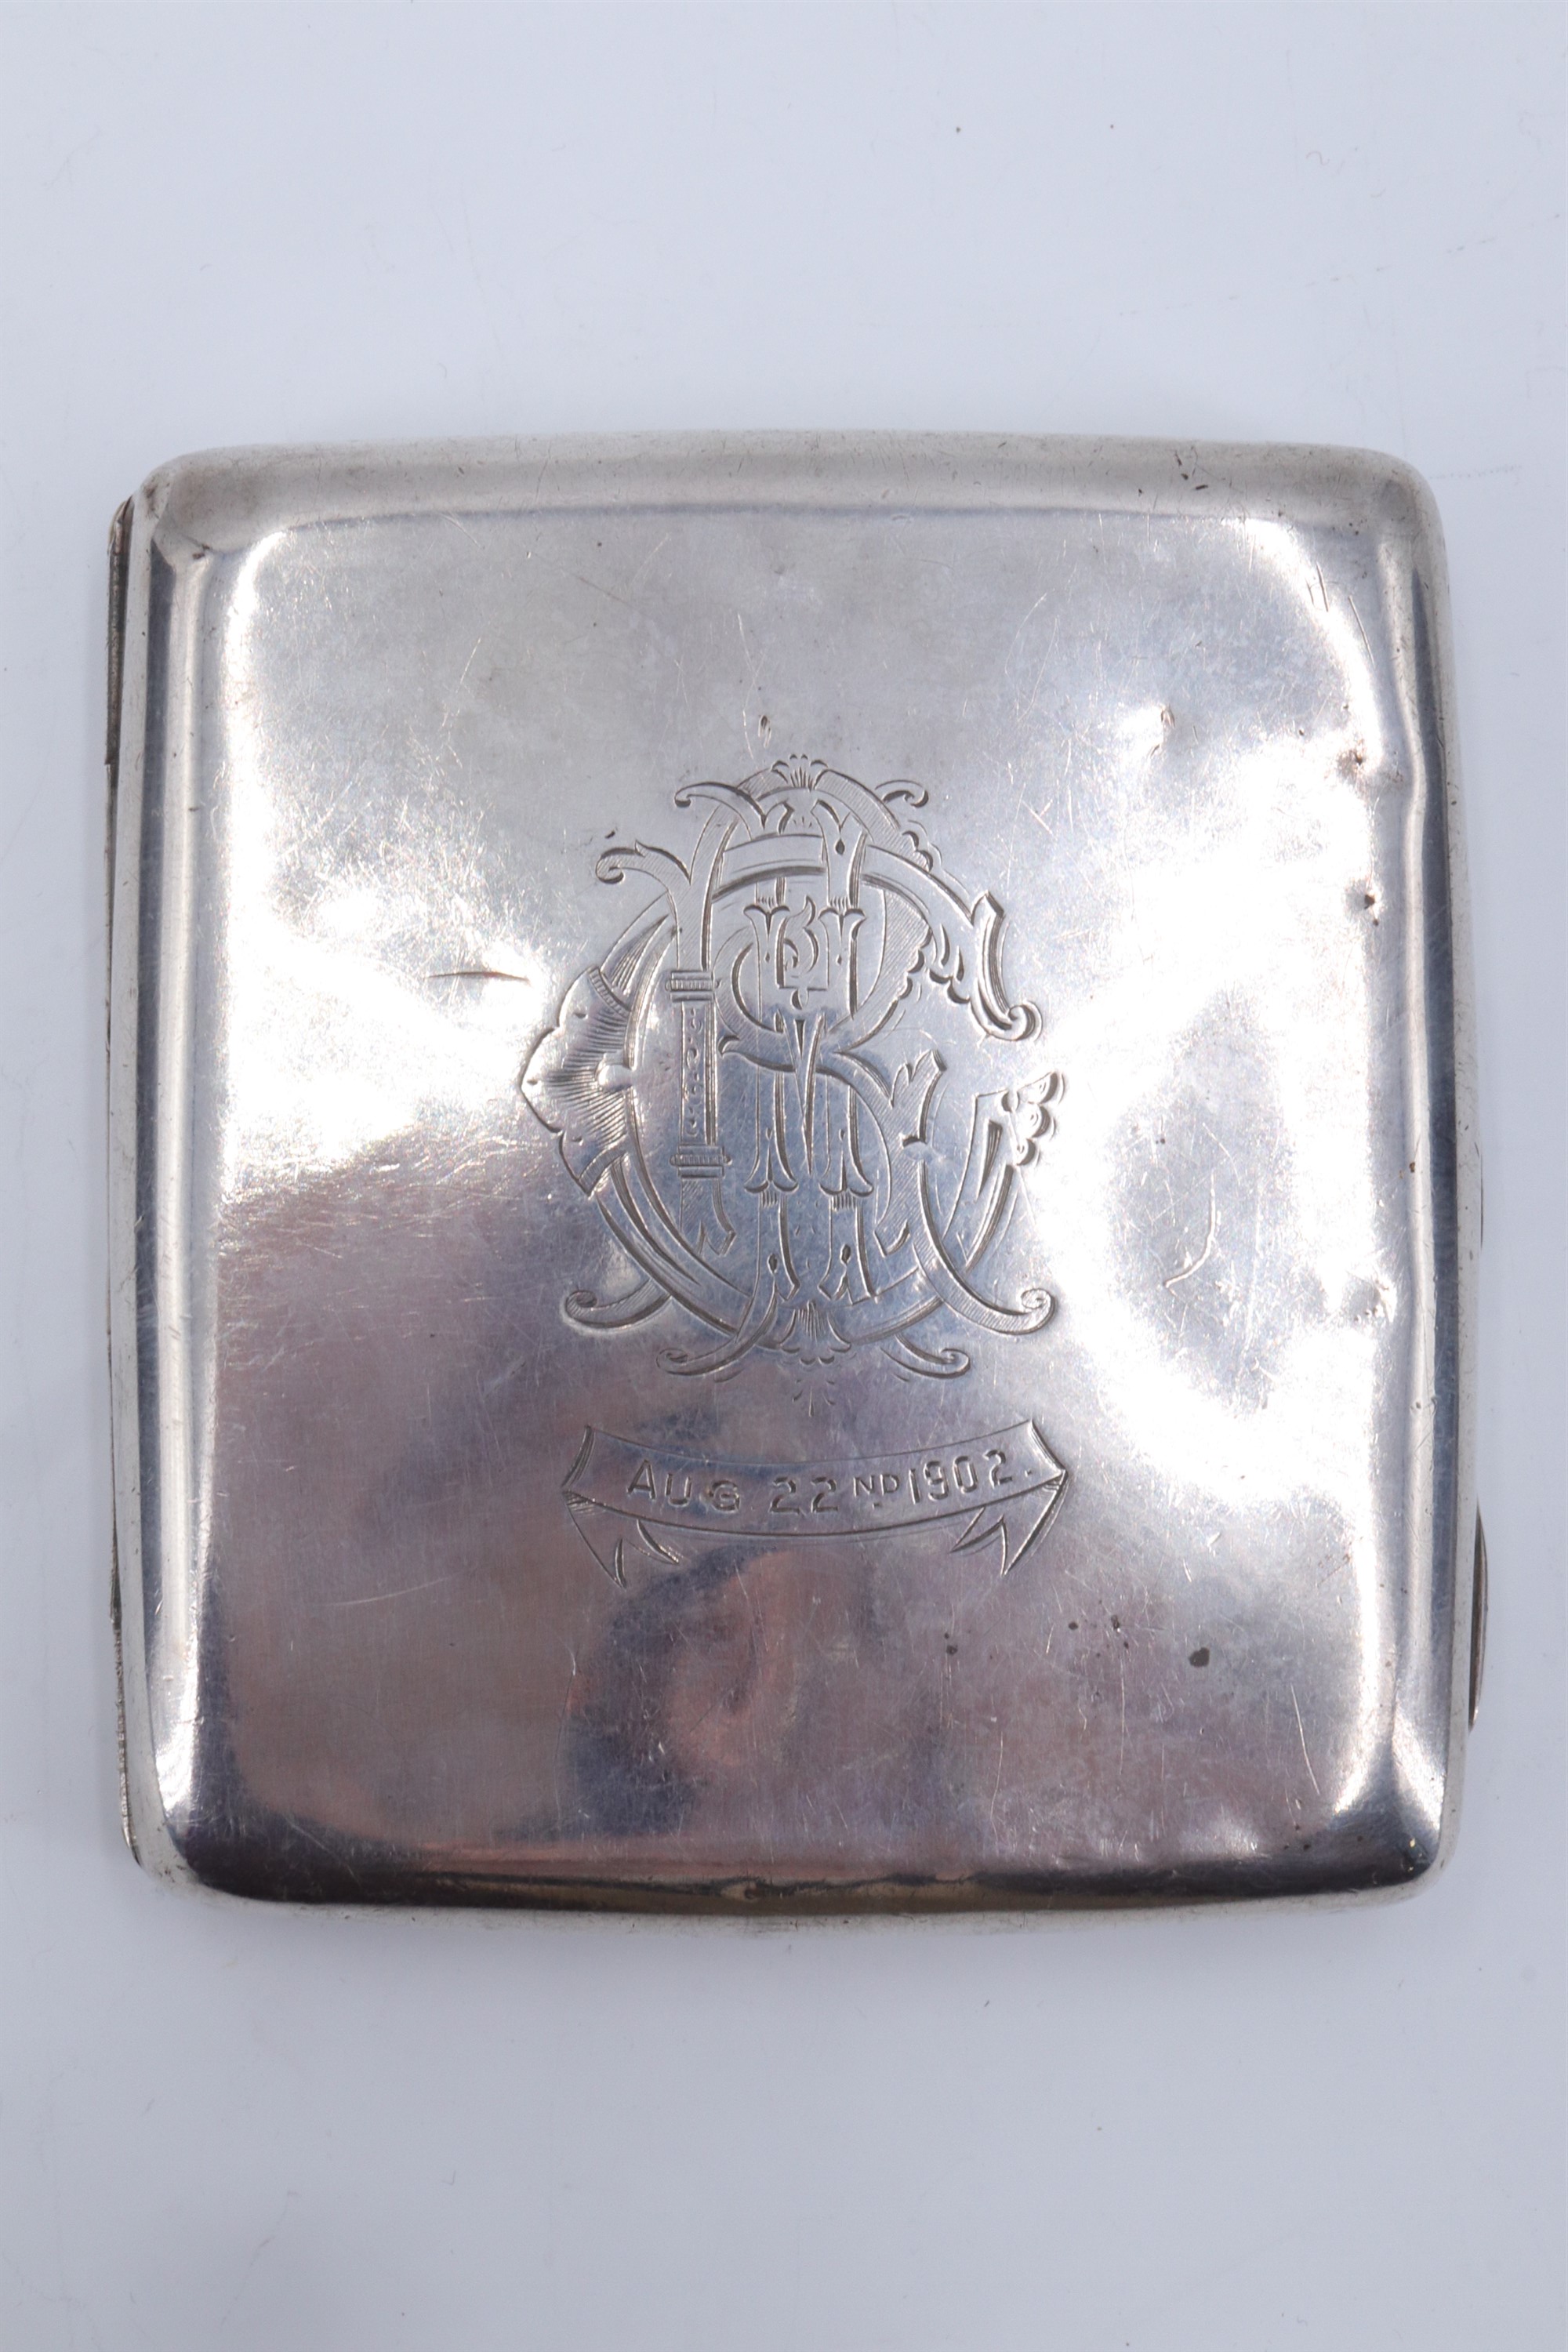 A Victorian silver cigarette case, engraved 'Aug 22nd 1902' surmounted by a monogram, Birmingham,